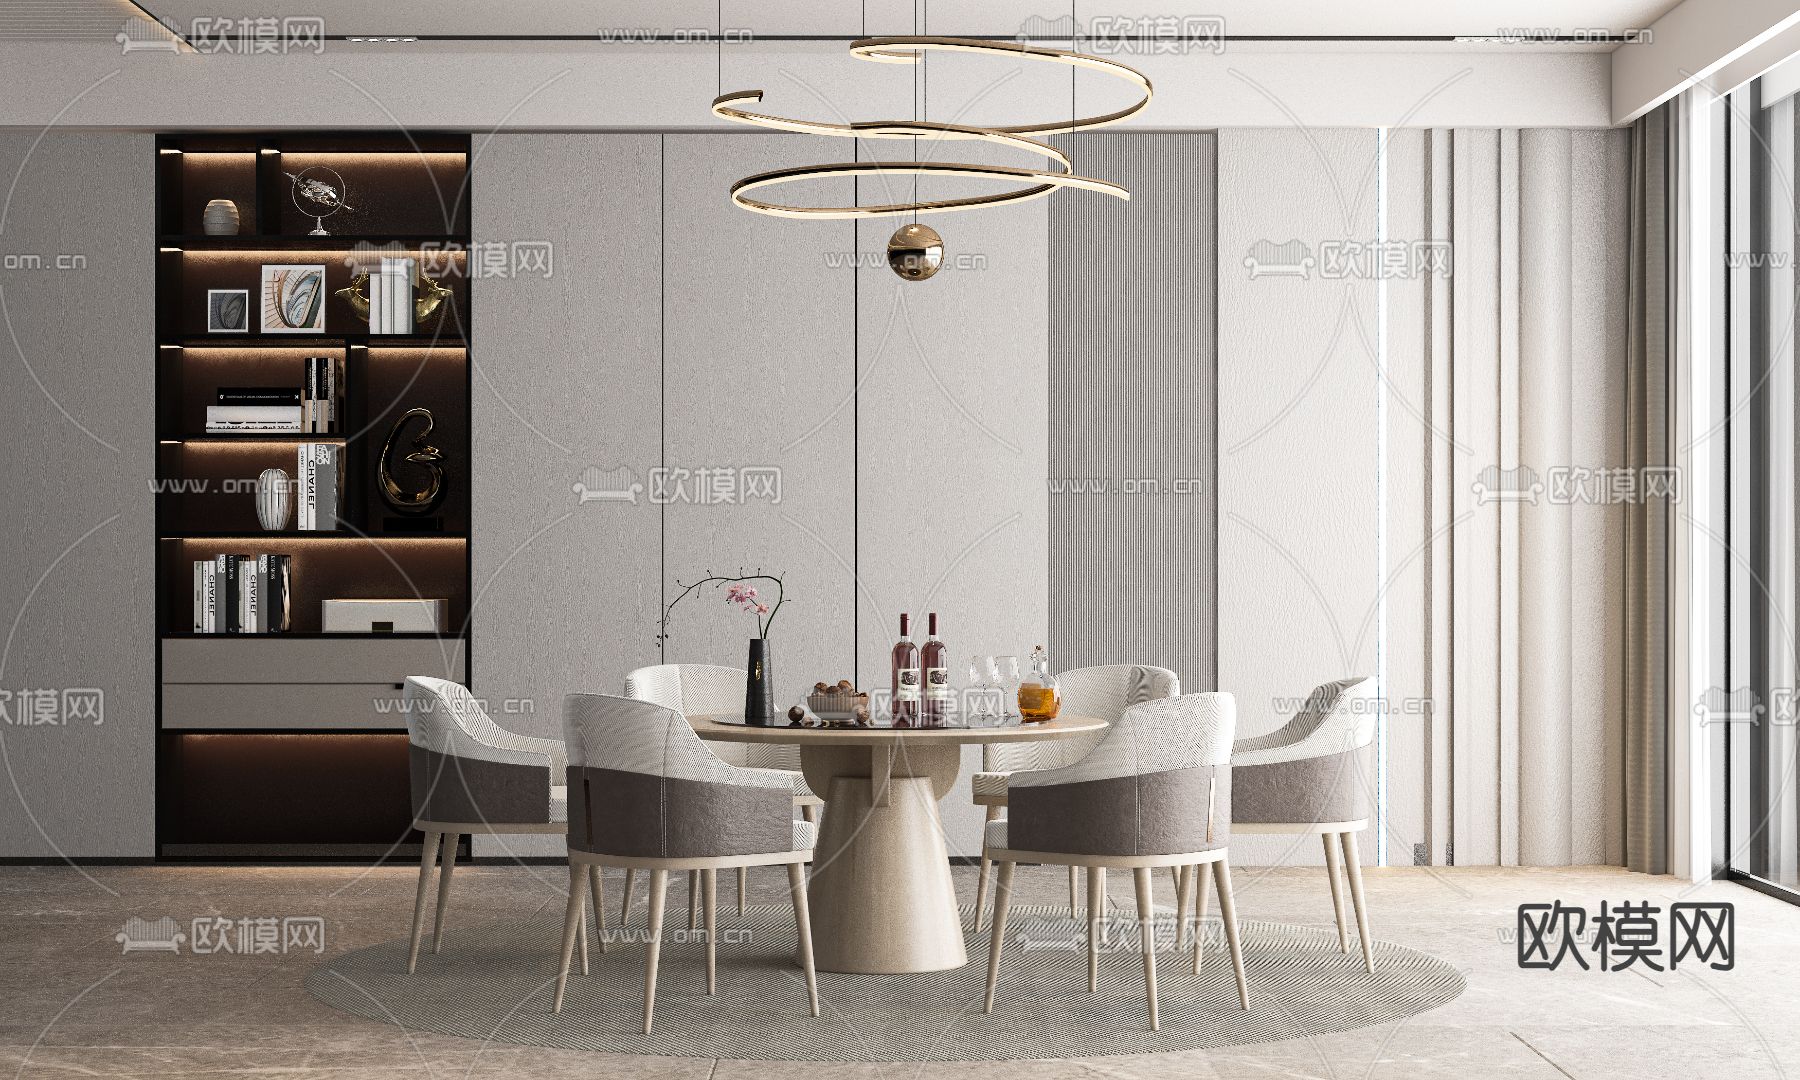 DINING ROOM SETS – VRAY / CORONA – 3D MODEL – 1407 - thumbnail 1